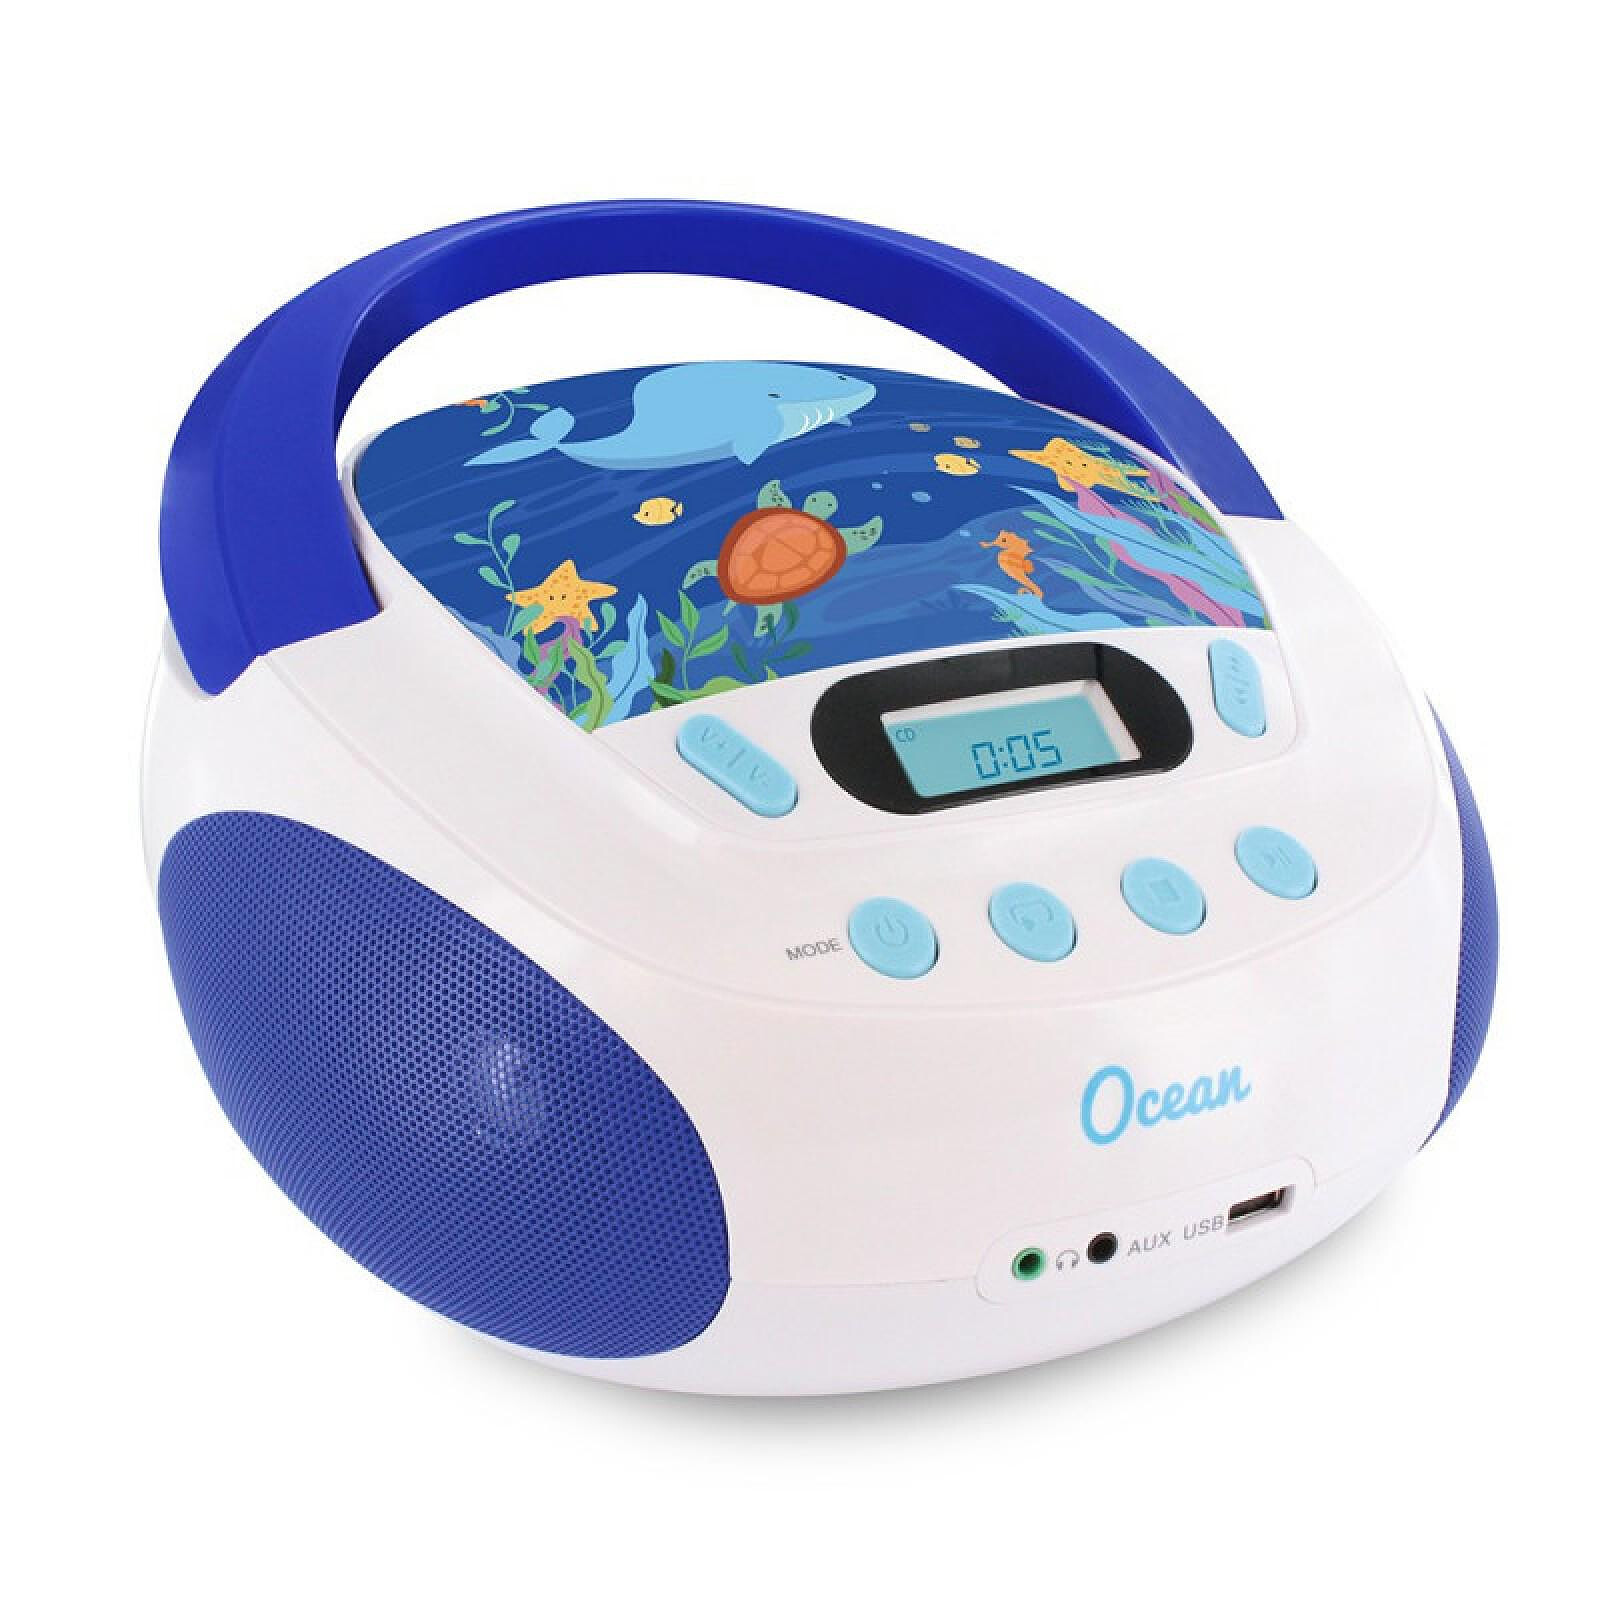 Metronic 477170 - Lecteur CD MP3 Ocean enfant avec port USB - Blanc et bleu  - Radio & radio réveil - LDLC